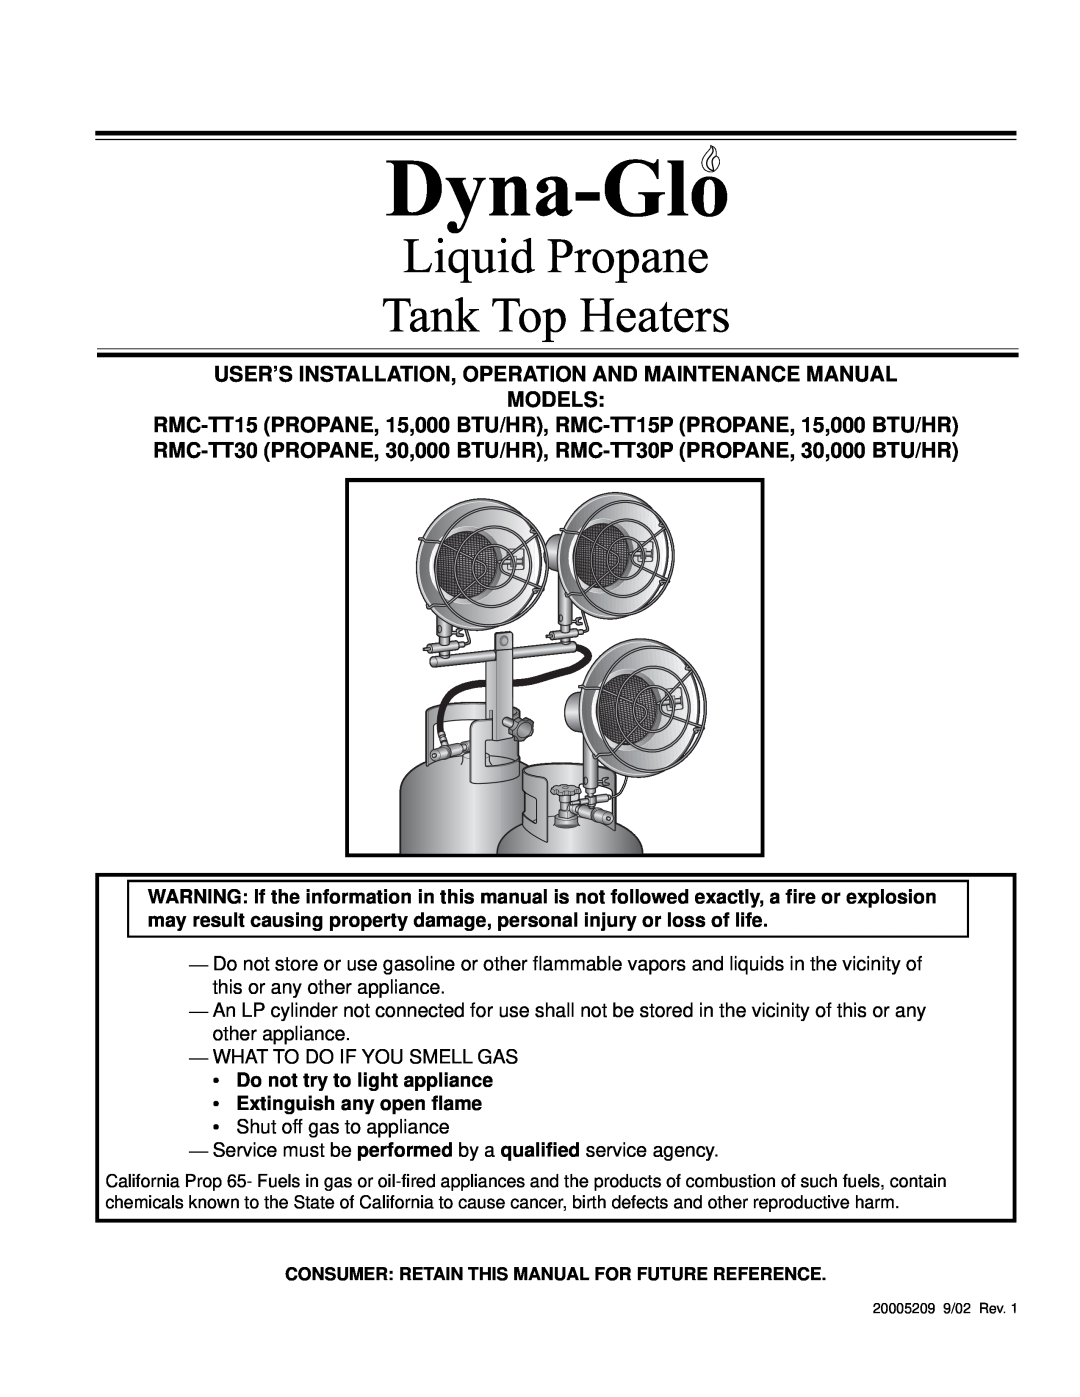 CFM Corporation RMC-TT15P, RMC-TT30P manual Dyna-Glo, Liquid Propane Tank Top Heaters 